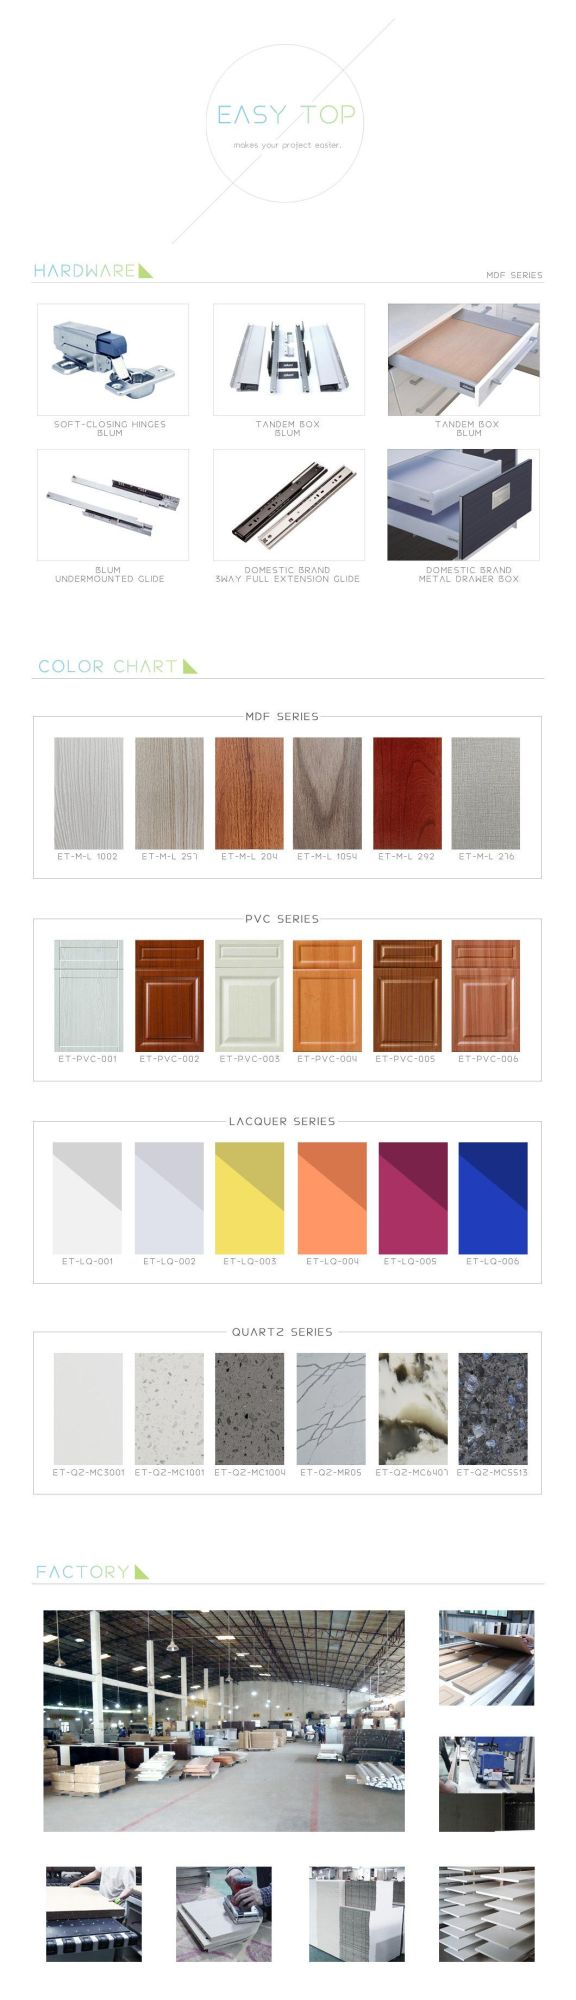 Affordable U-Shaped Cupboard Matt Color Finish Modular Design Furniture PVC Kitchen Cabinets